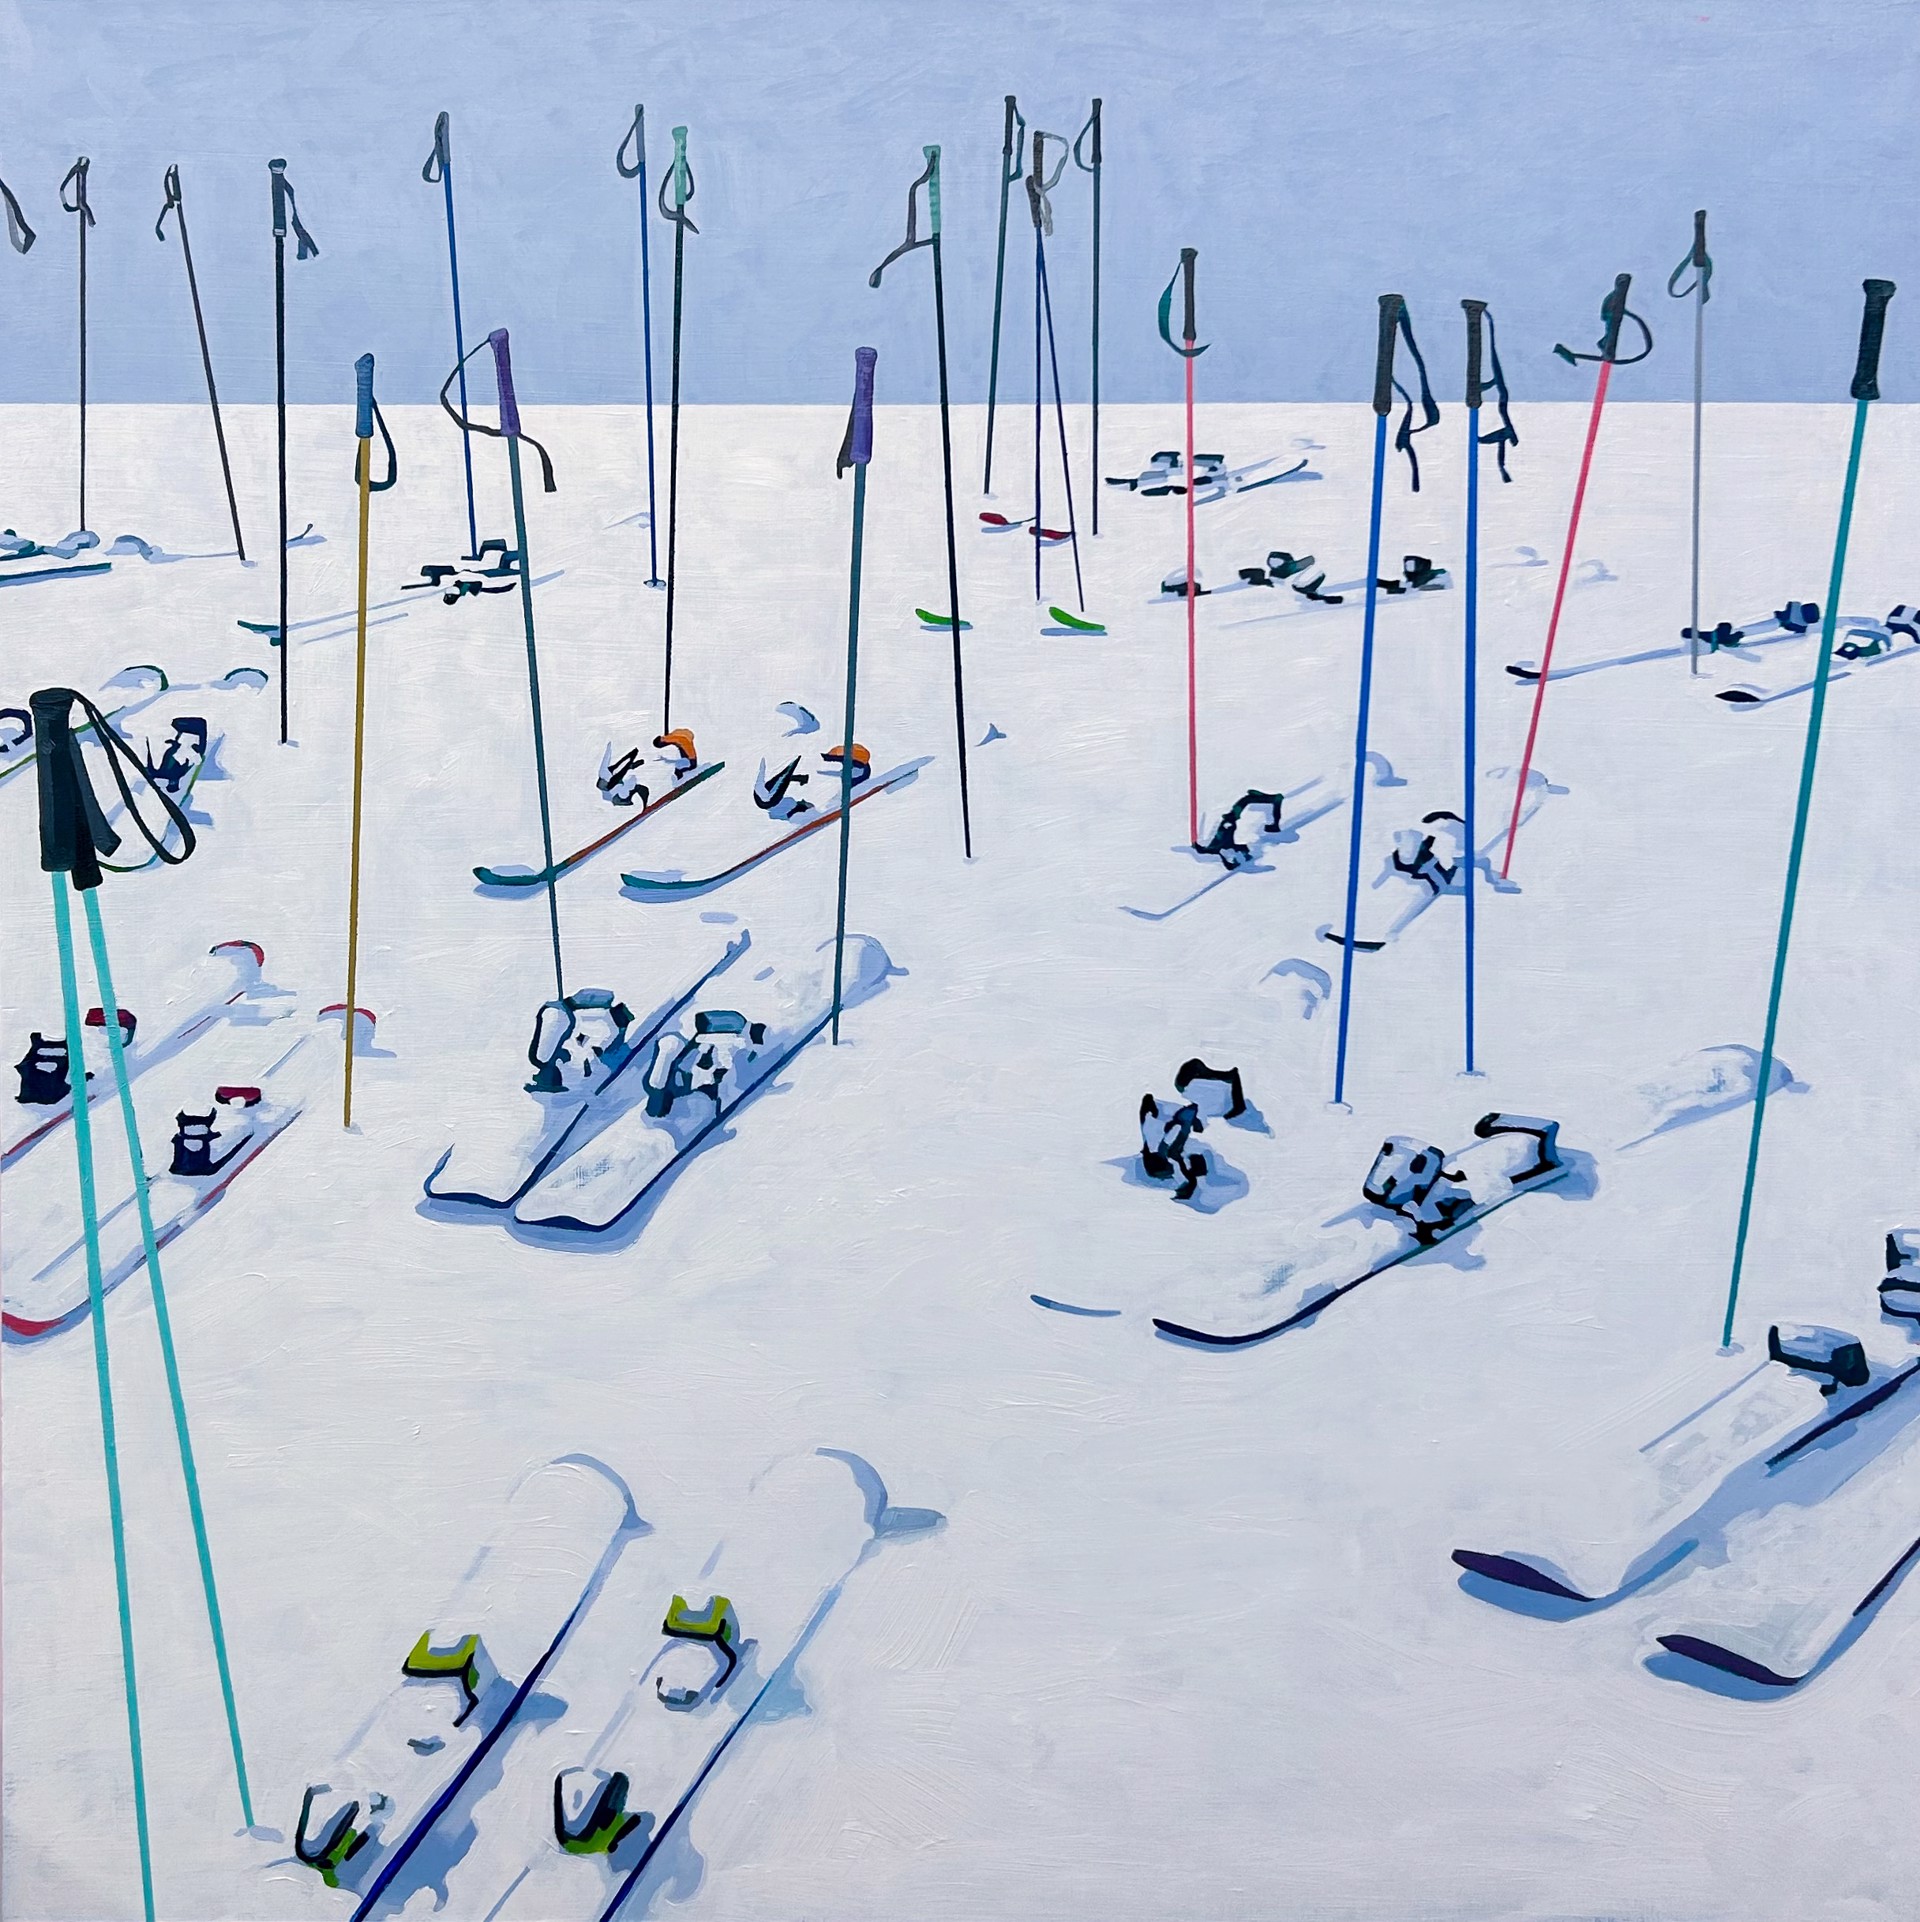 Ski's on Powder Day by Berkeley Hoerr